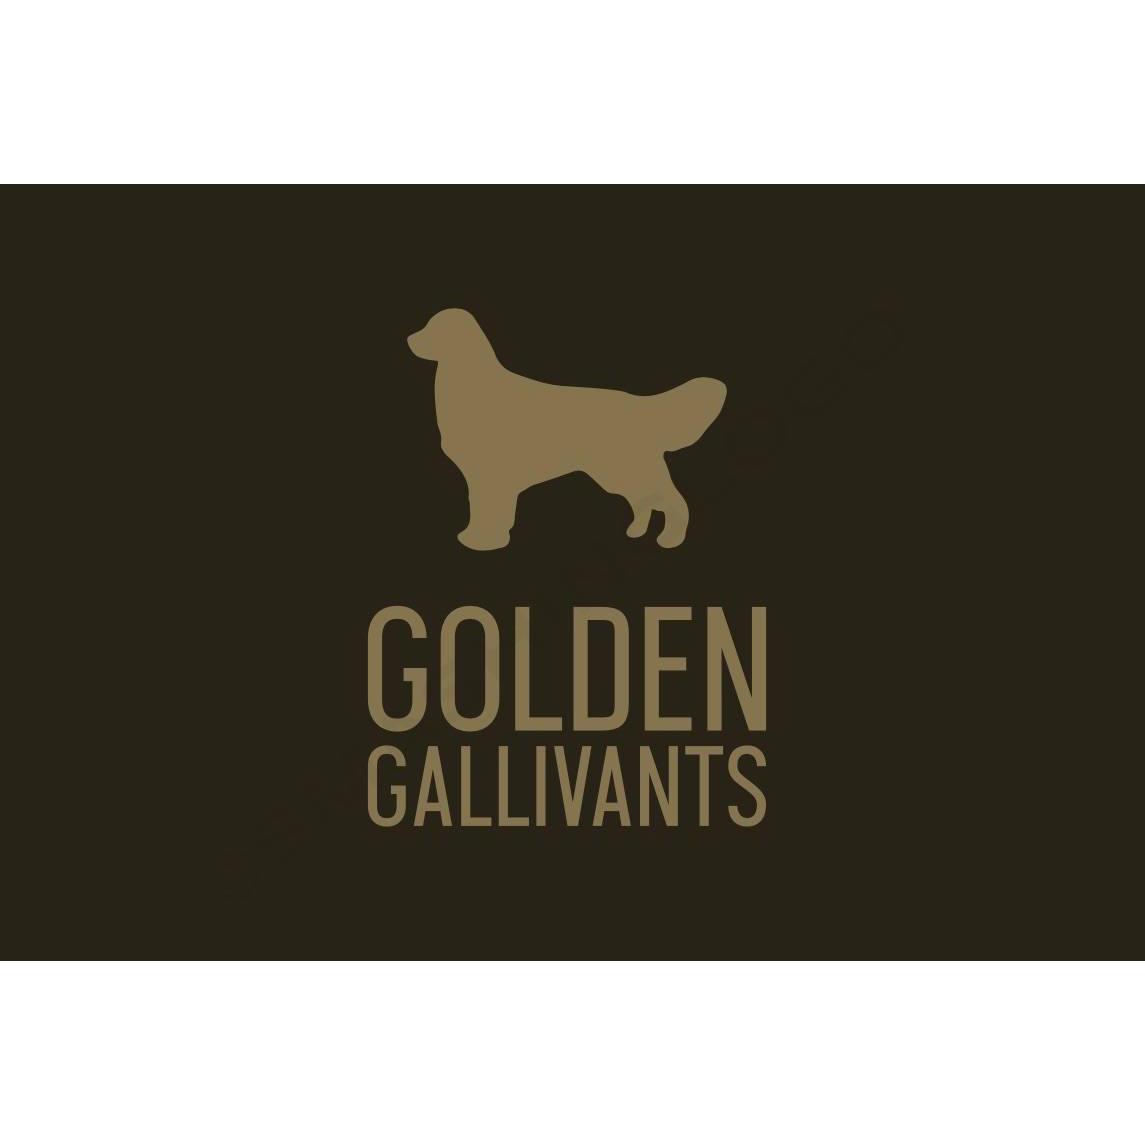 Golden Gallivants - Catterick Garrison, North Yorkshire DL9 3ES - 07544 744905 | ShowMeLocal.com